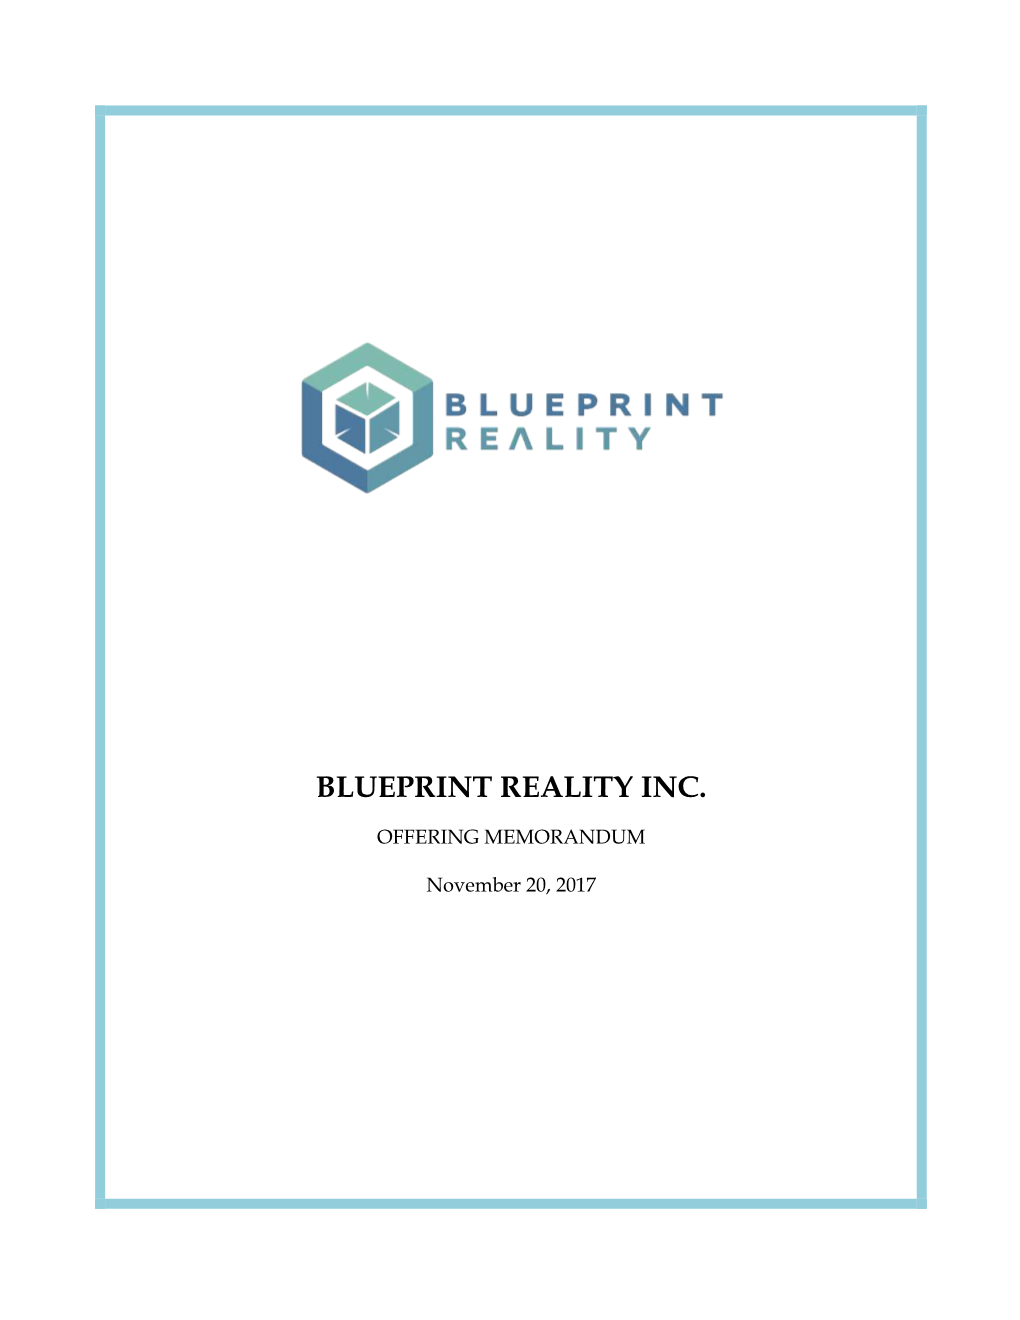 Blueprint Reality Inc